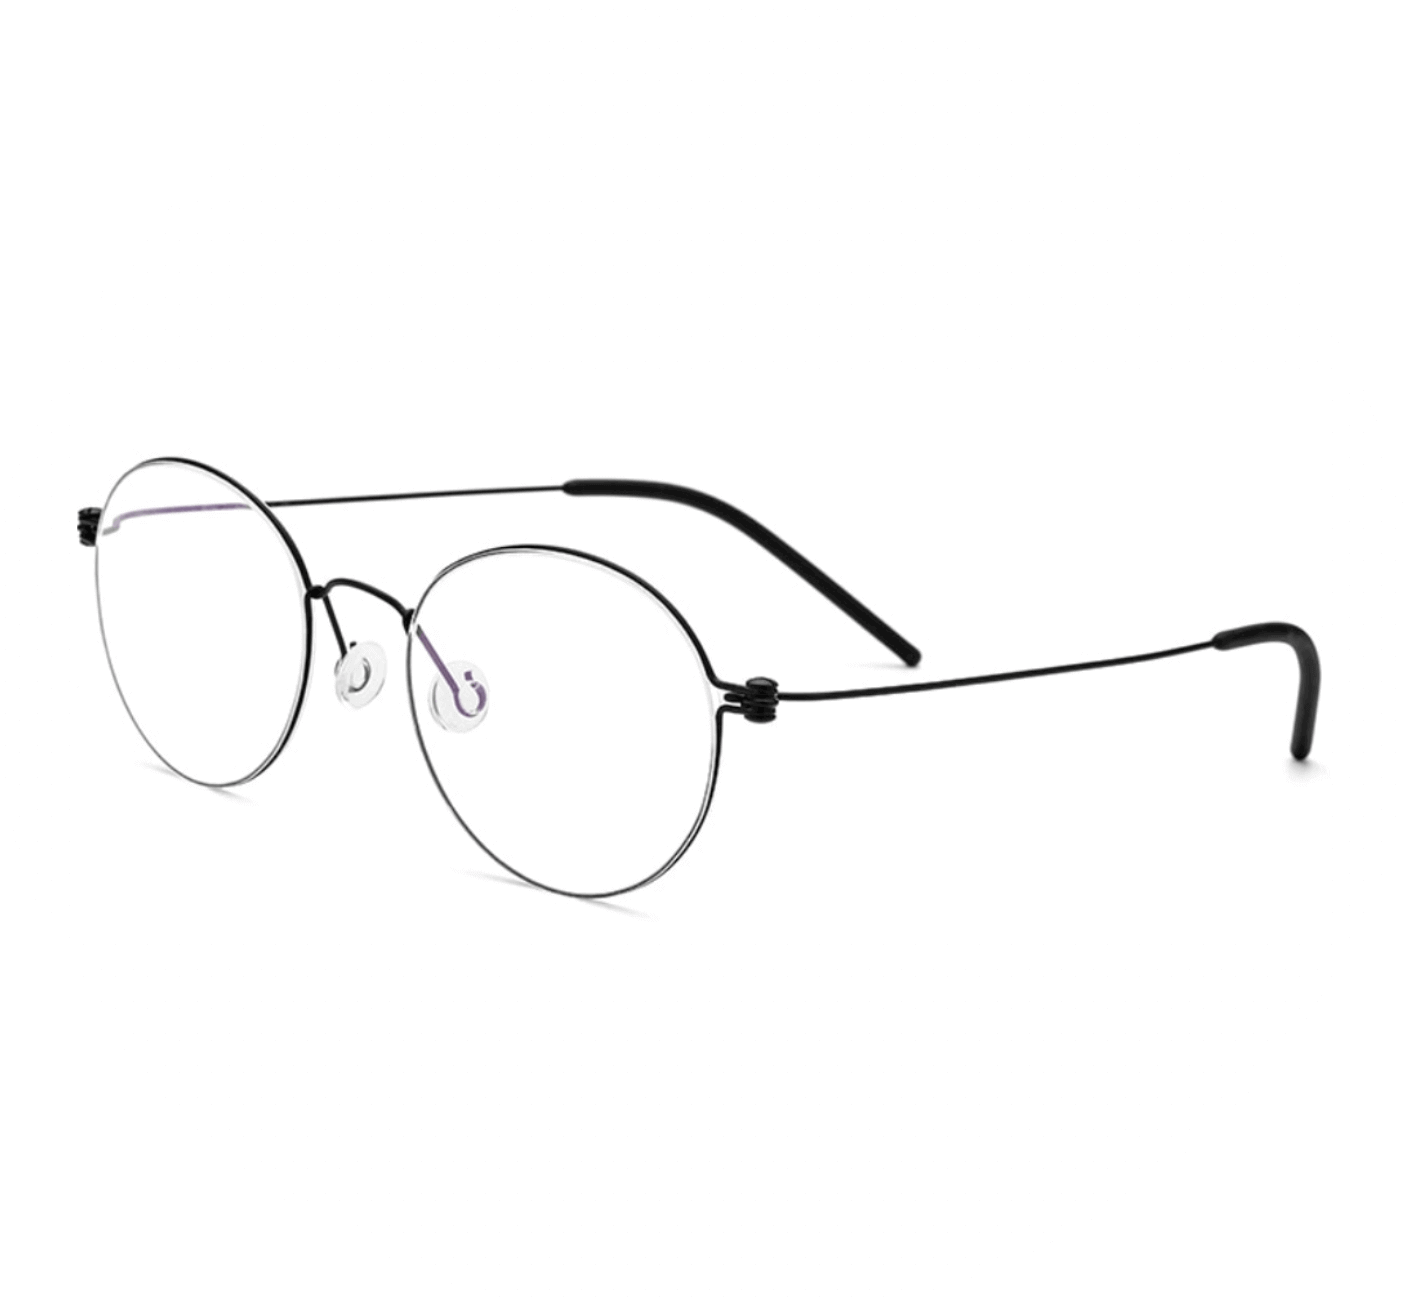 Titanium Glasses Frame, eyeglass factory